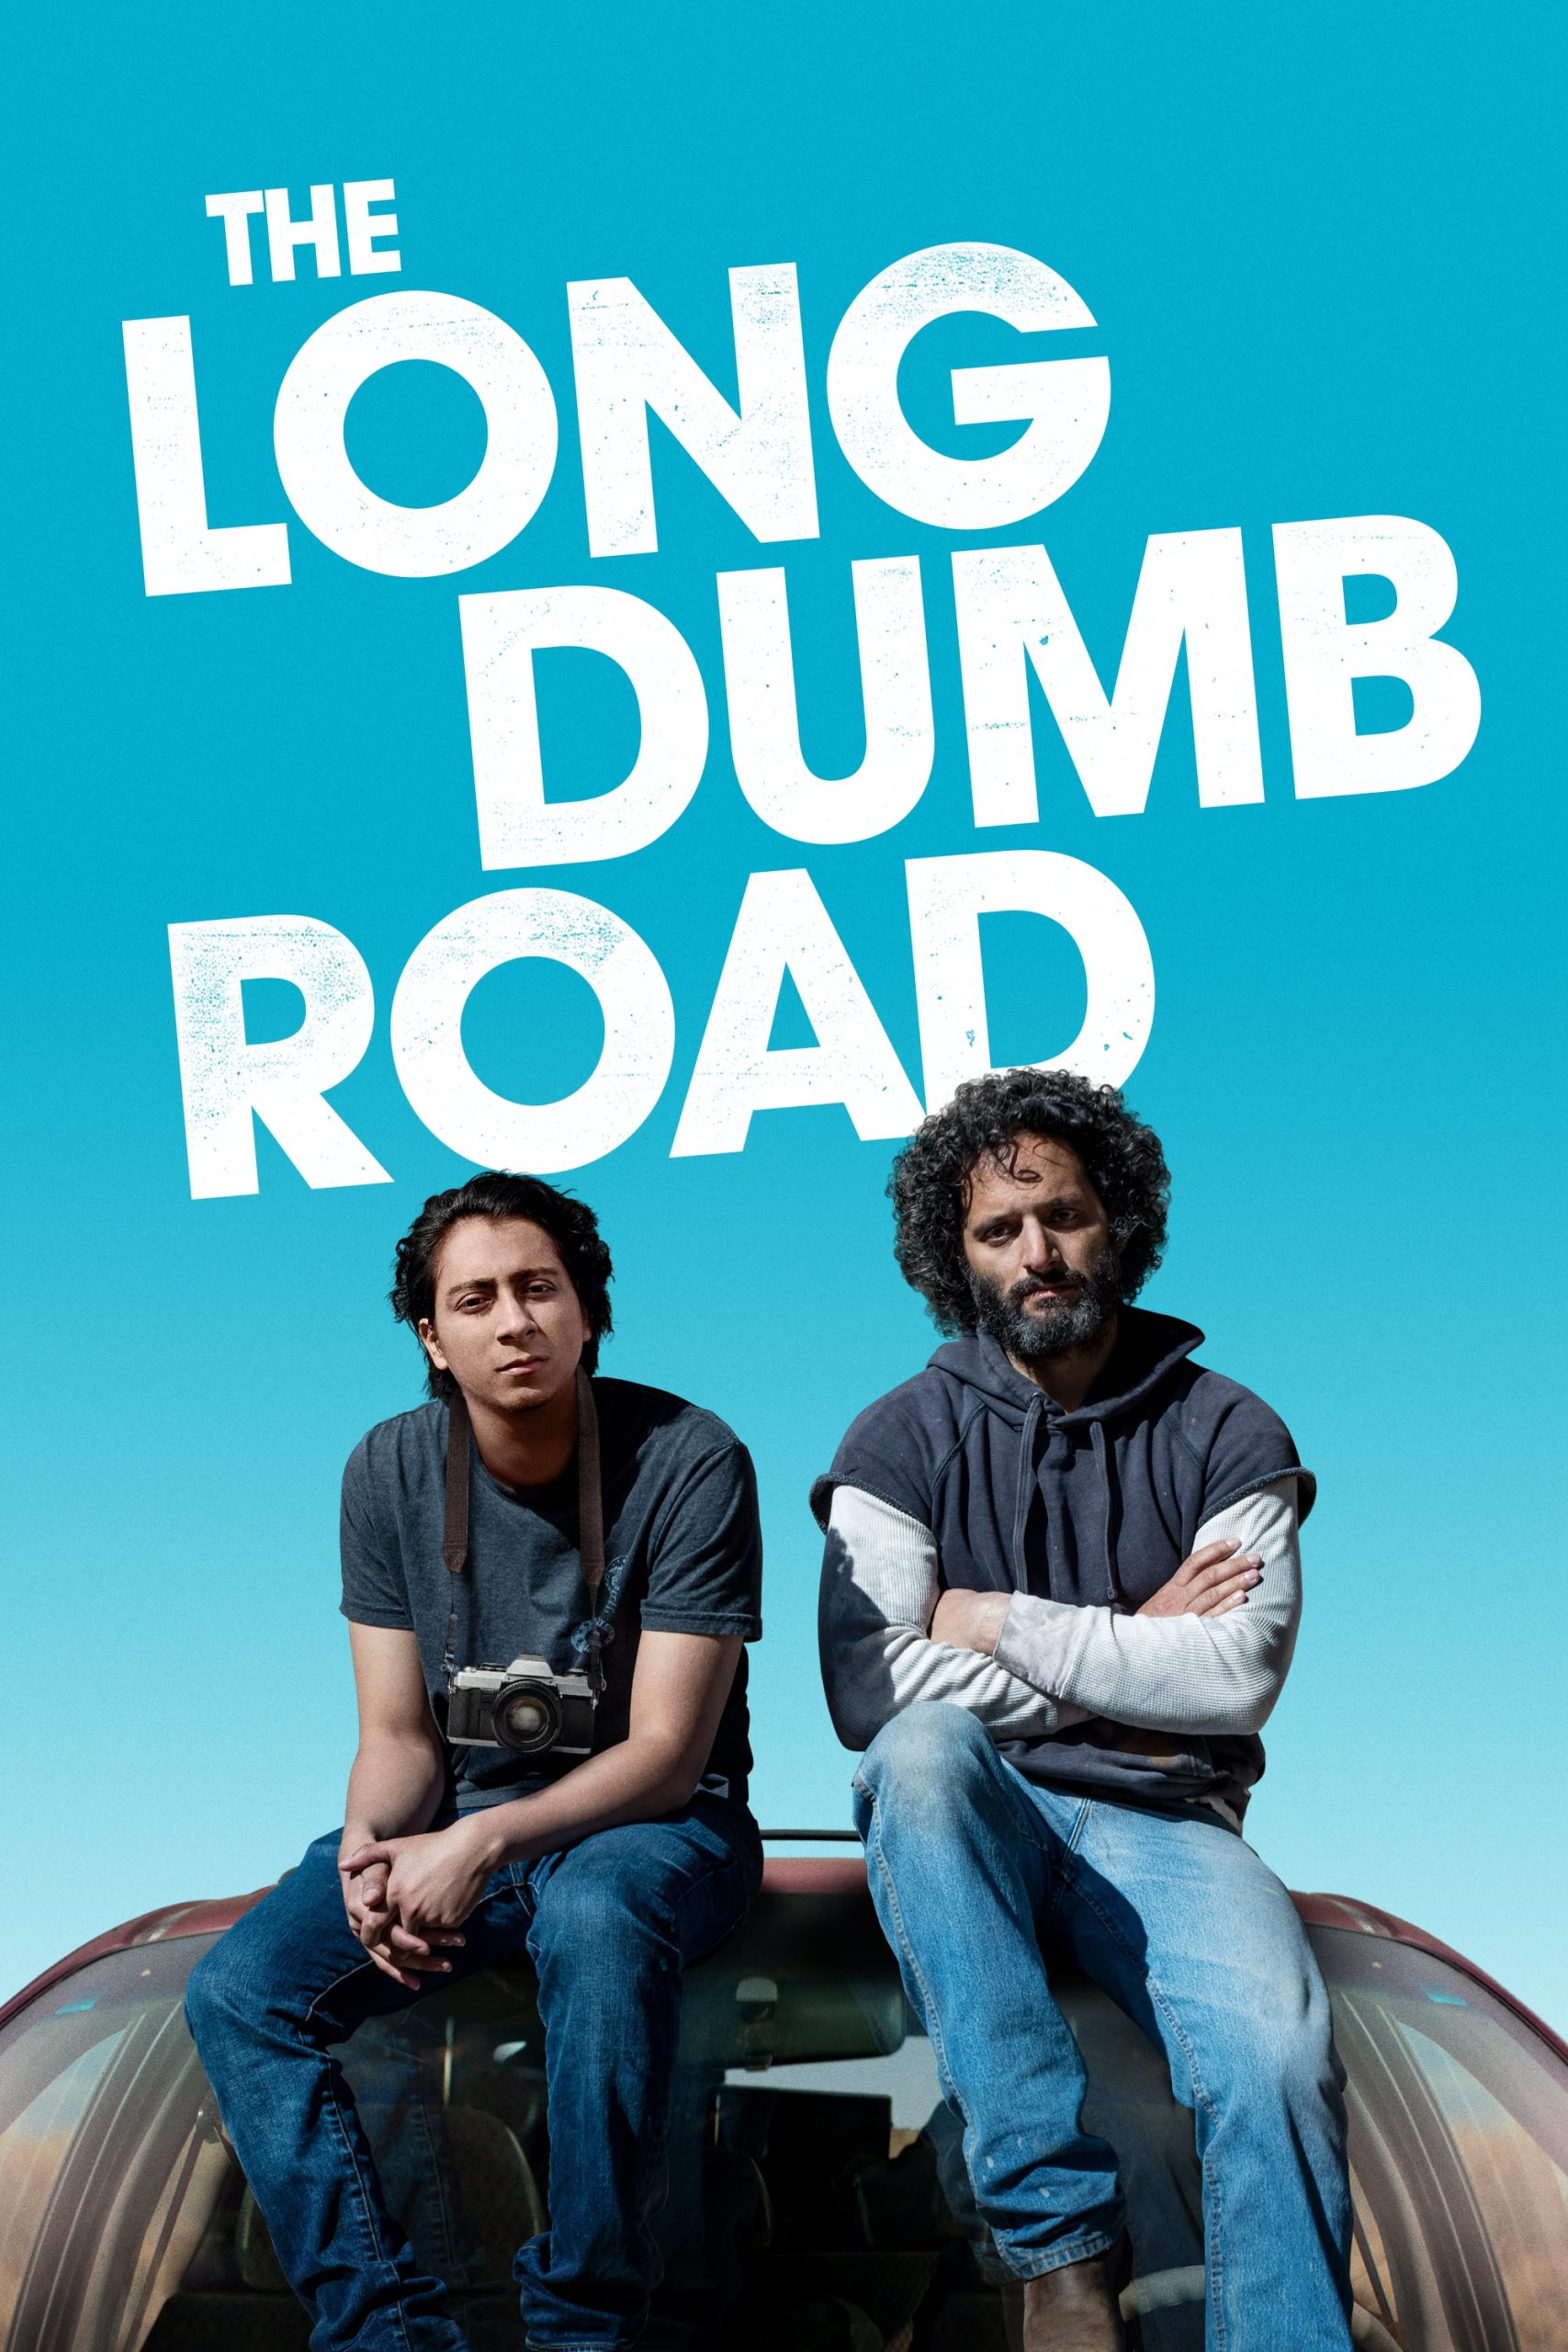 The Long Dumb Road [Sub-ITA] (2018)